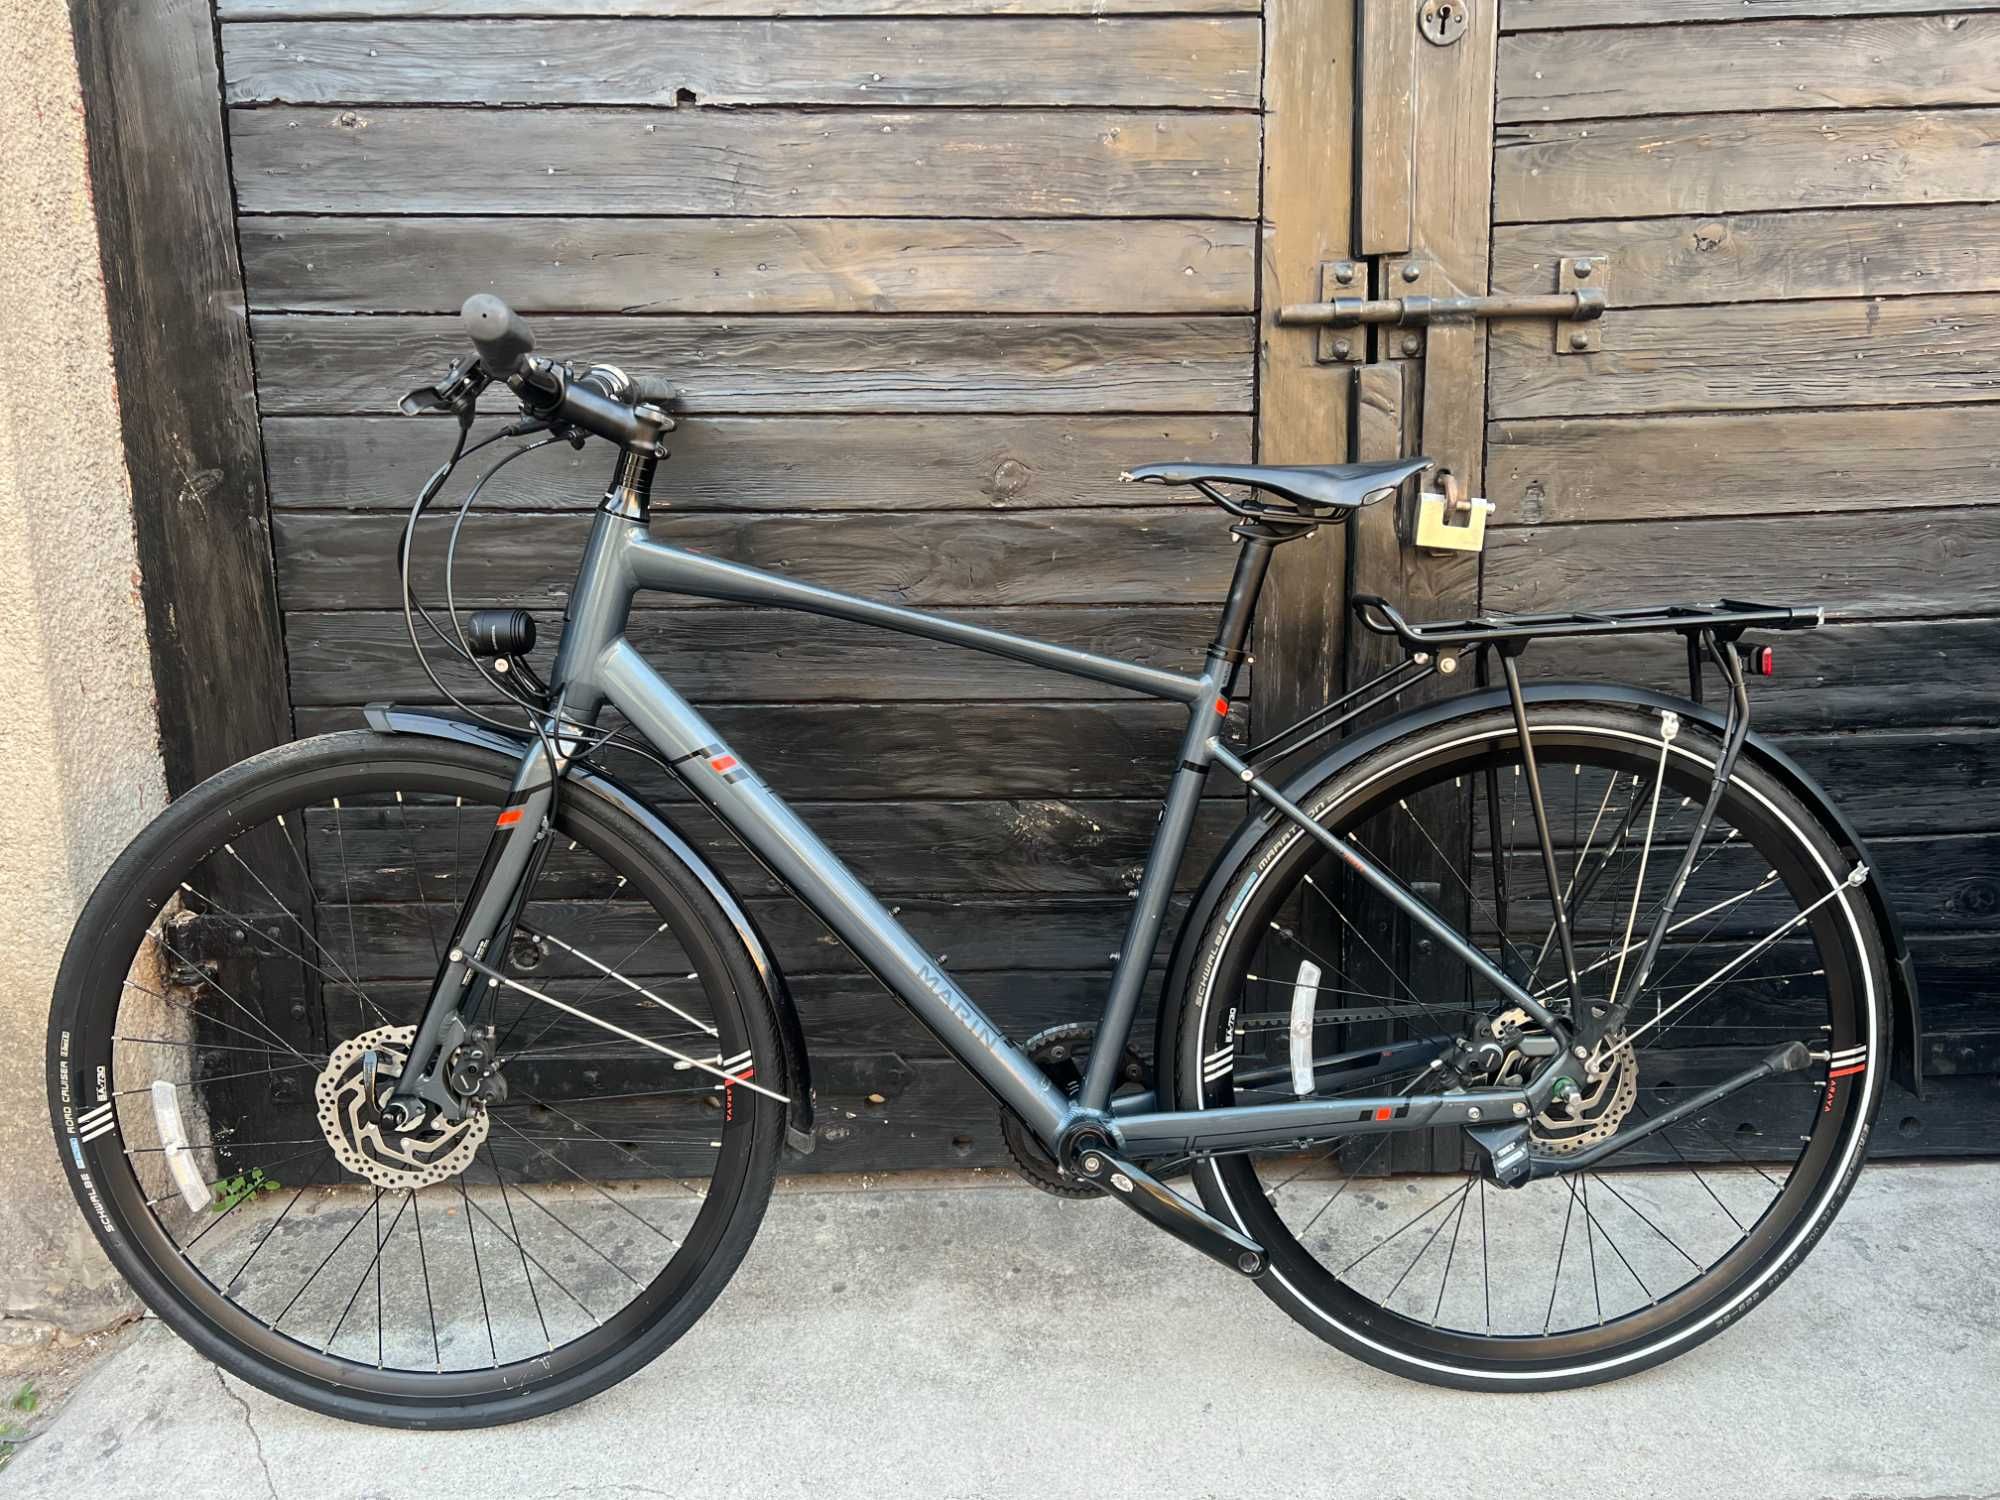 Rower na pasku karbonowym